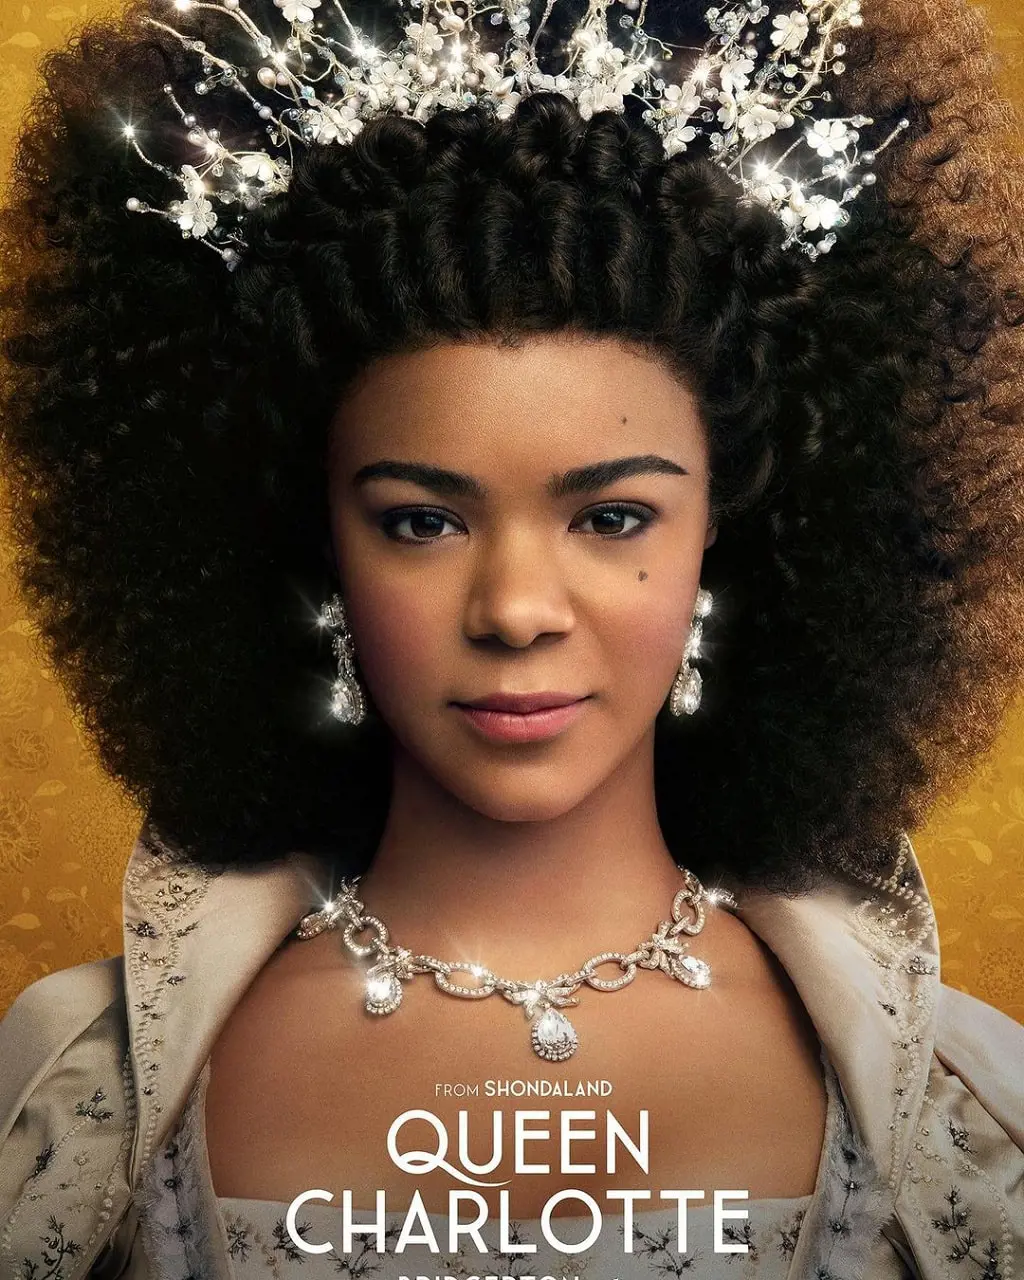 Queen Charlotte is spin-off series of Bridgerton series of Netflix. 